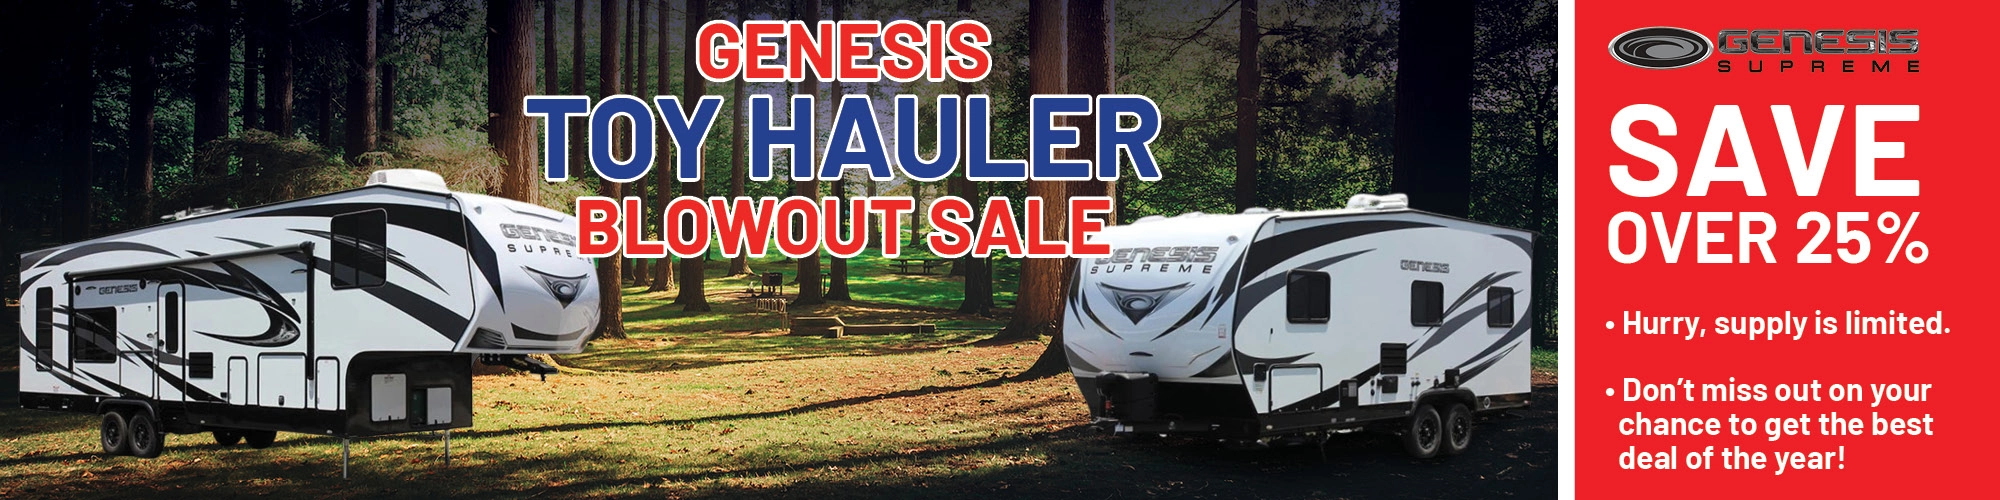 Tacoma RV - Genesis Yoy Hauler Blowout Sale